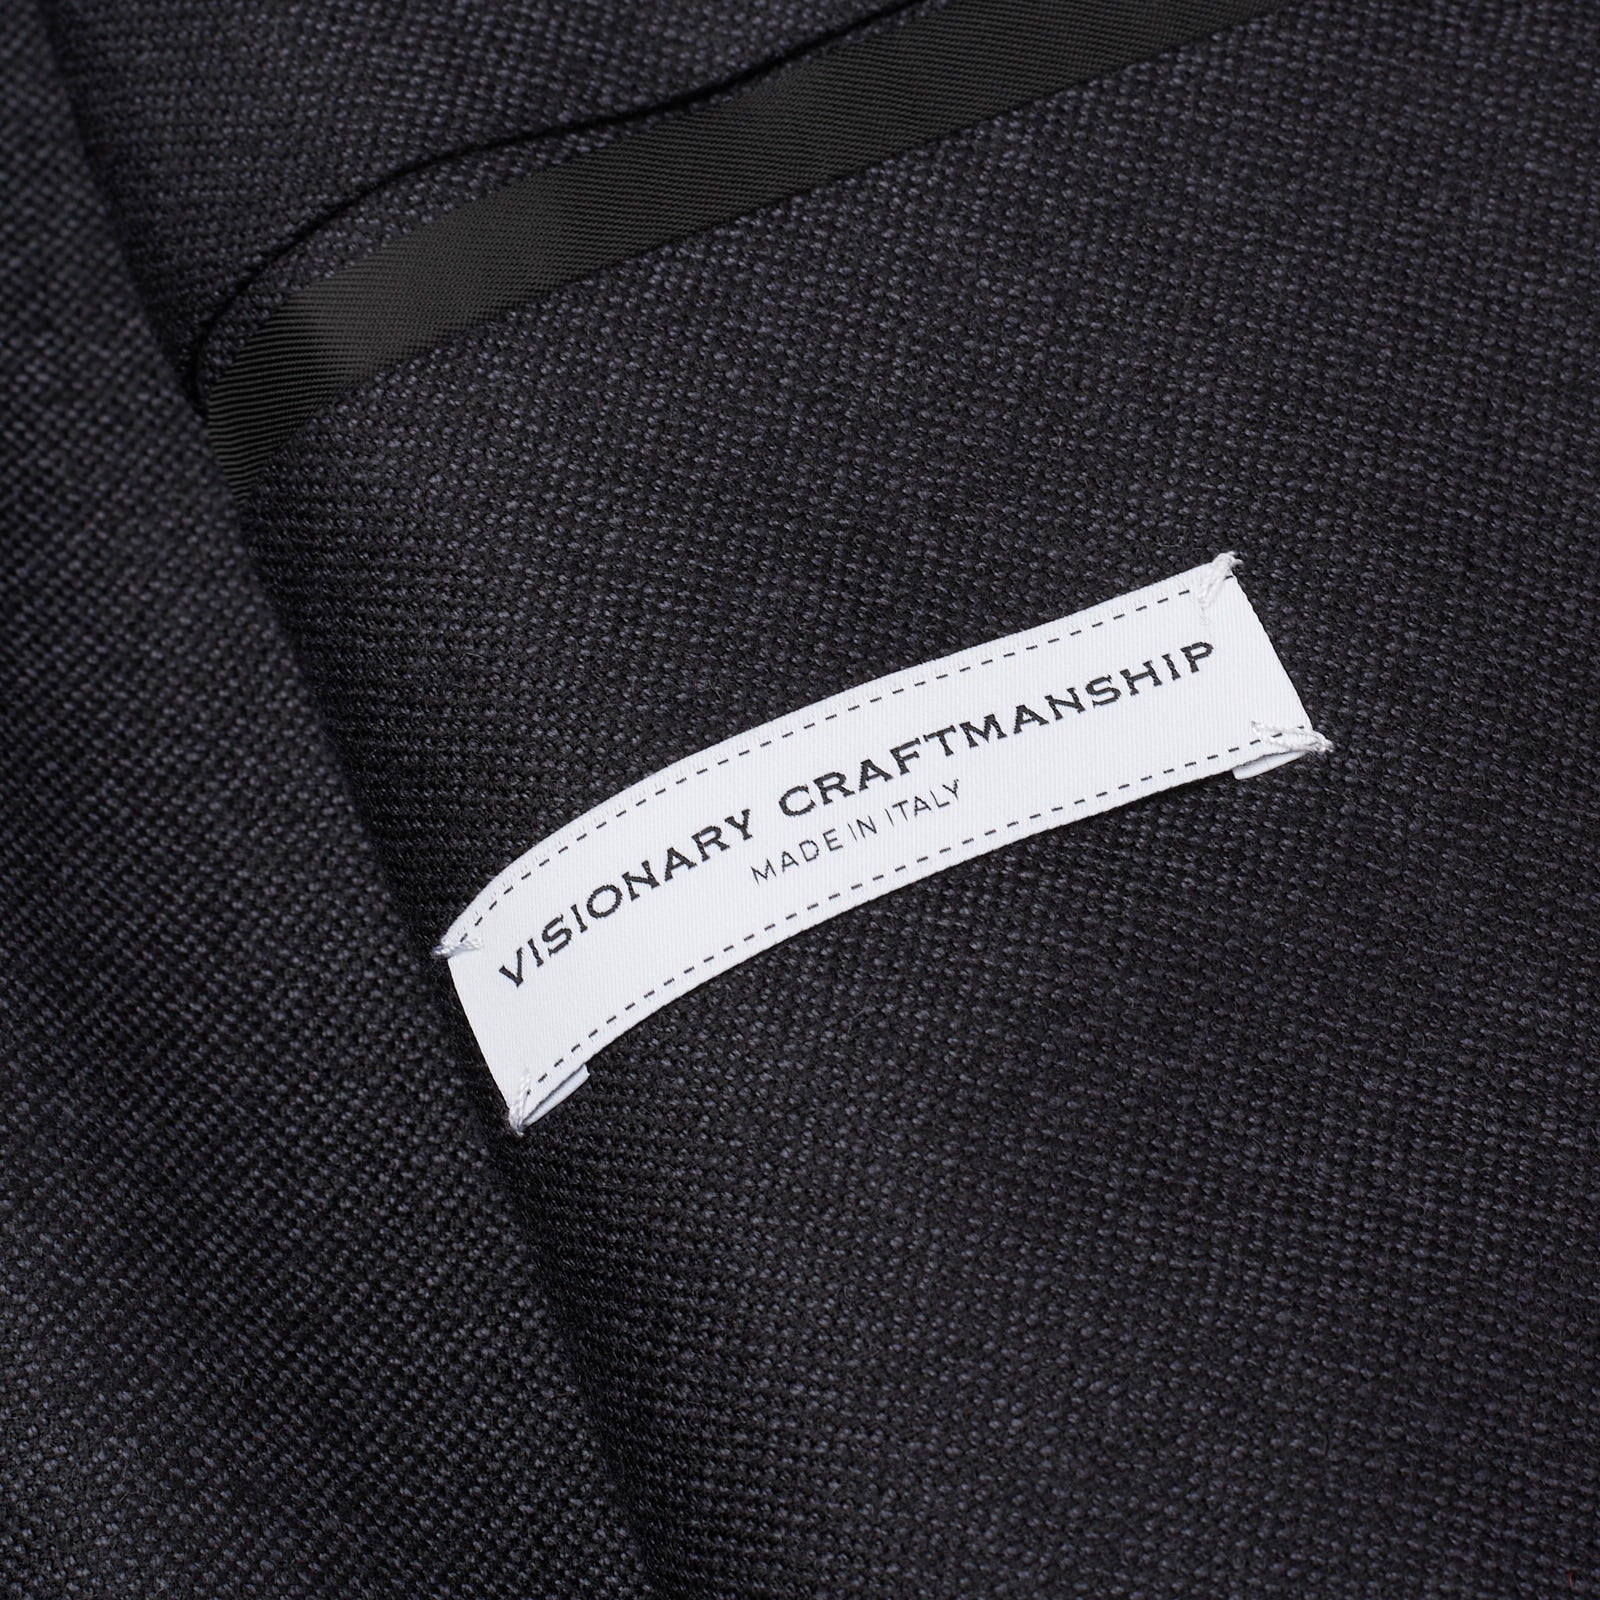 BOGLIOLI Milano "K.Jacket" Dark Gray Virgin Wool Unlined Jacket EU 46 NEW US 36 BOGLIOLI